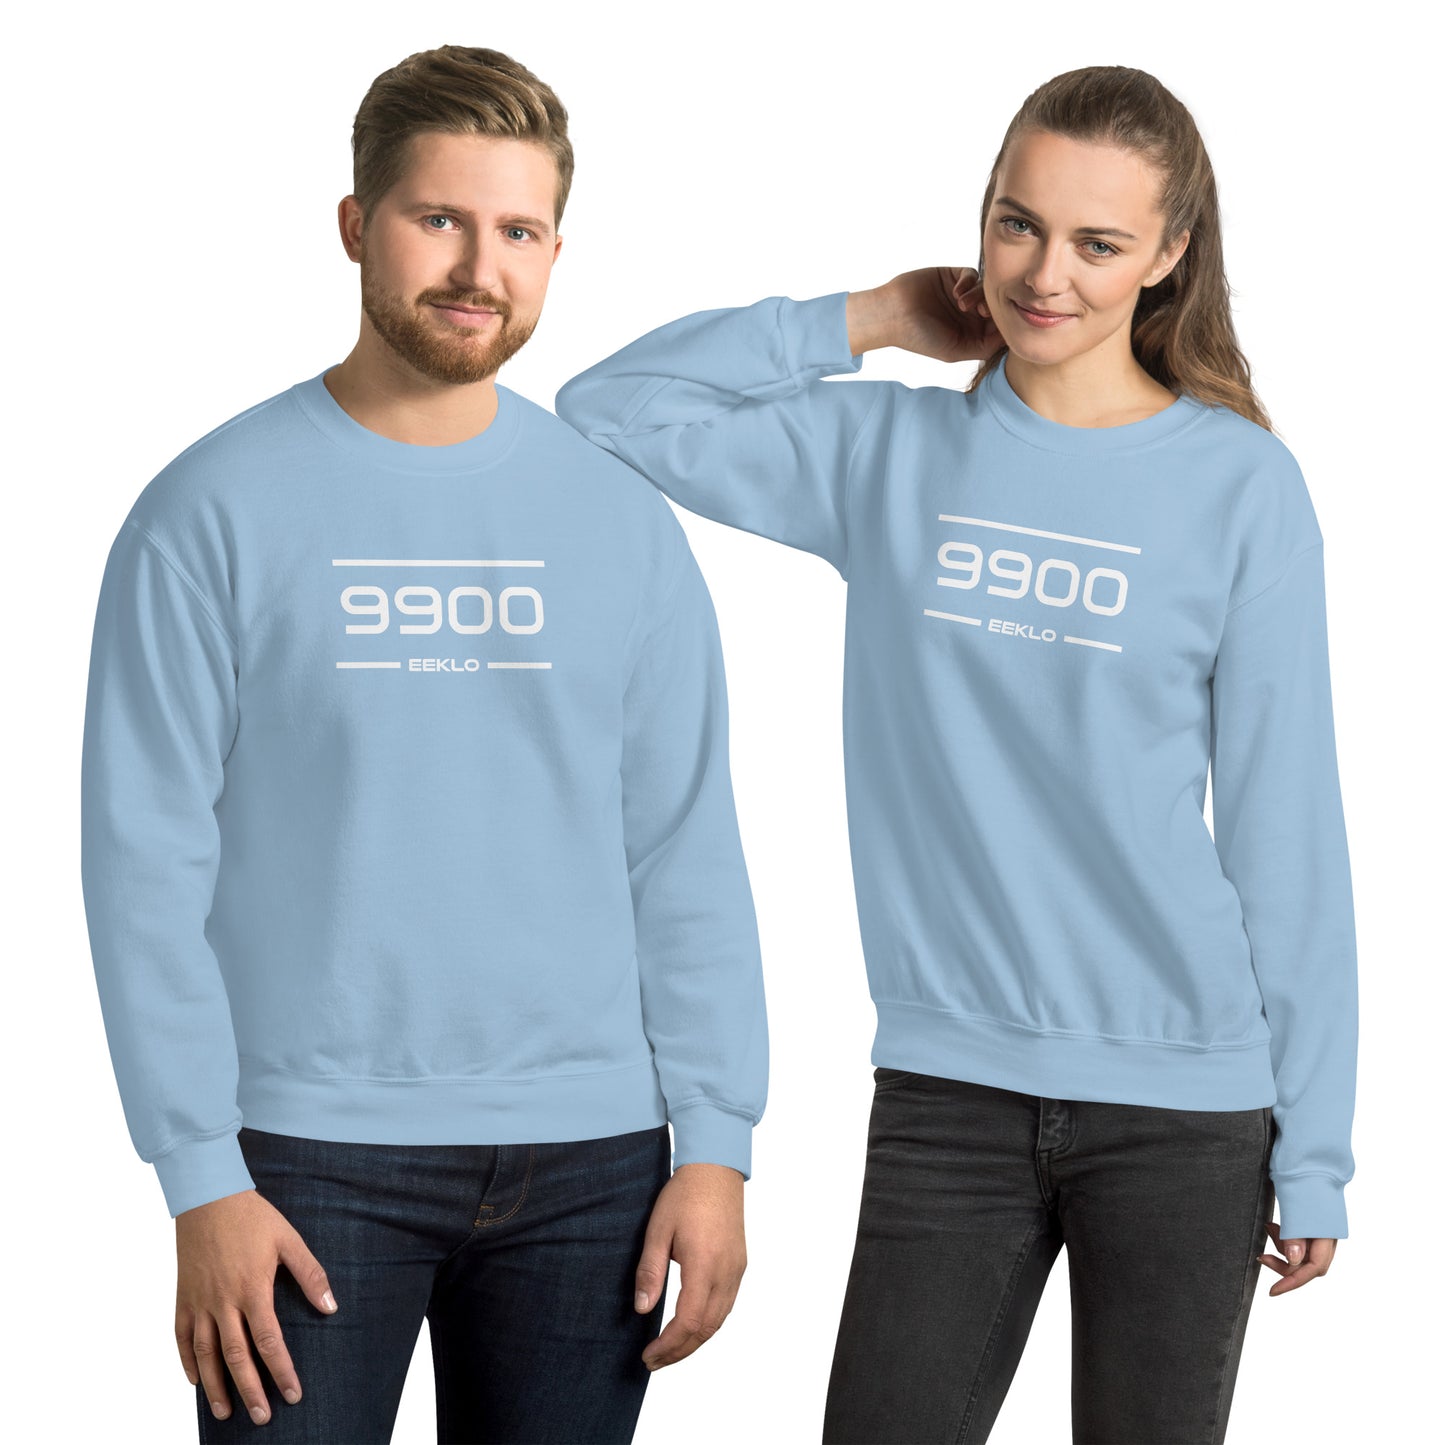 Sweater - 9900 - Eeklo (M/V)